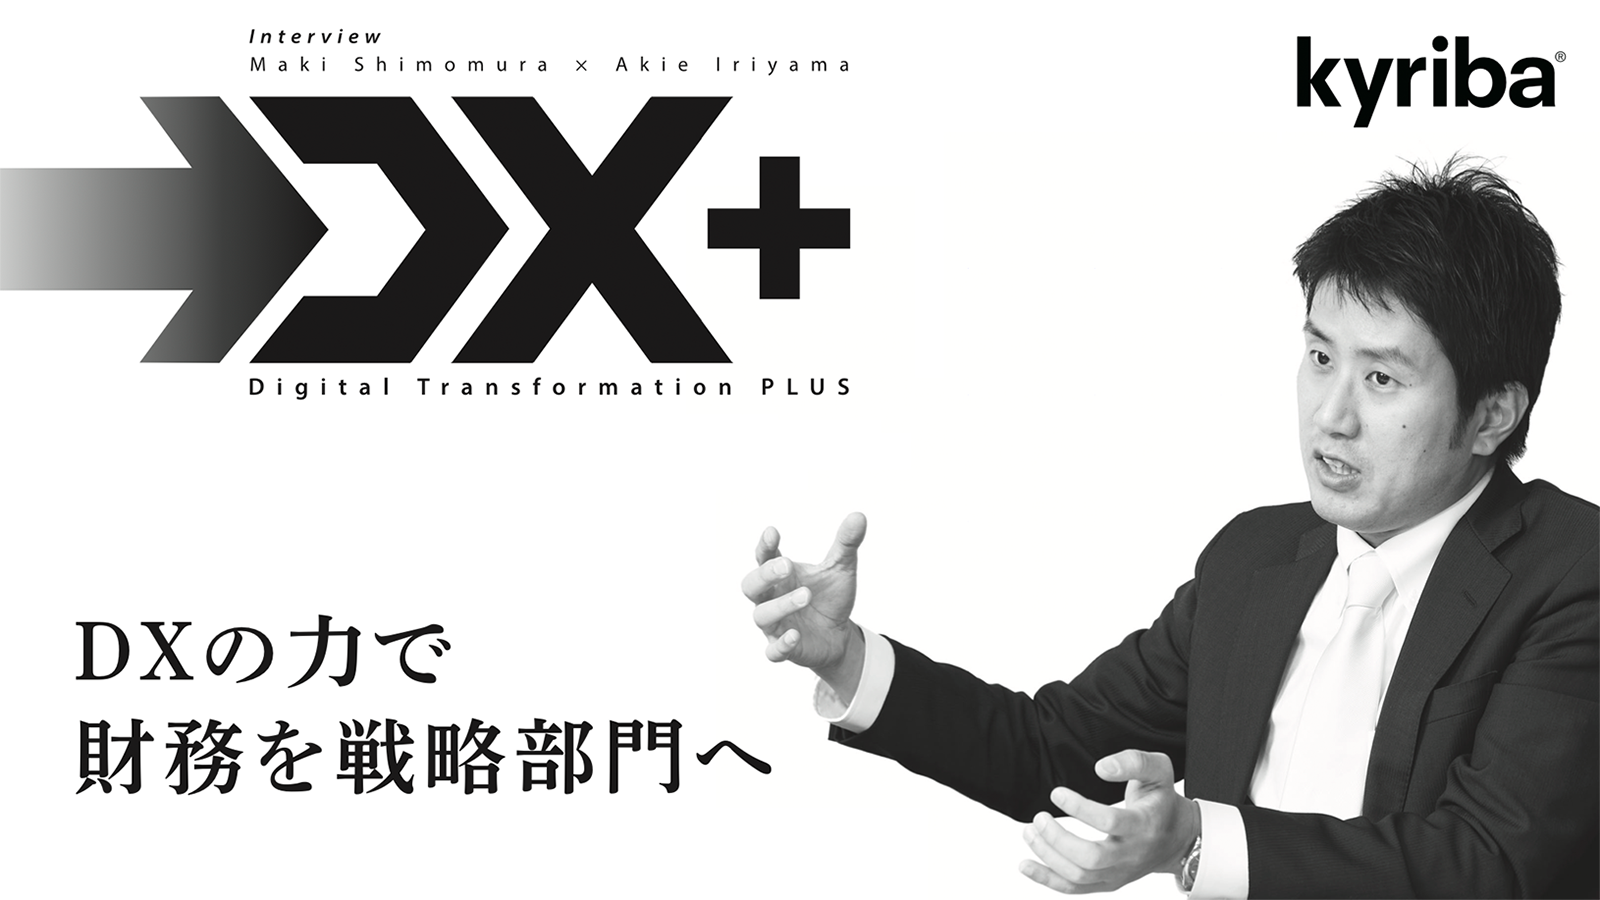 DX Plus Interview - Maki Shimomura and Akie Iriyama